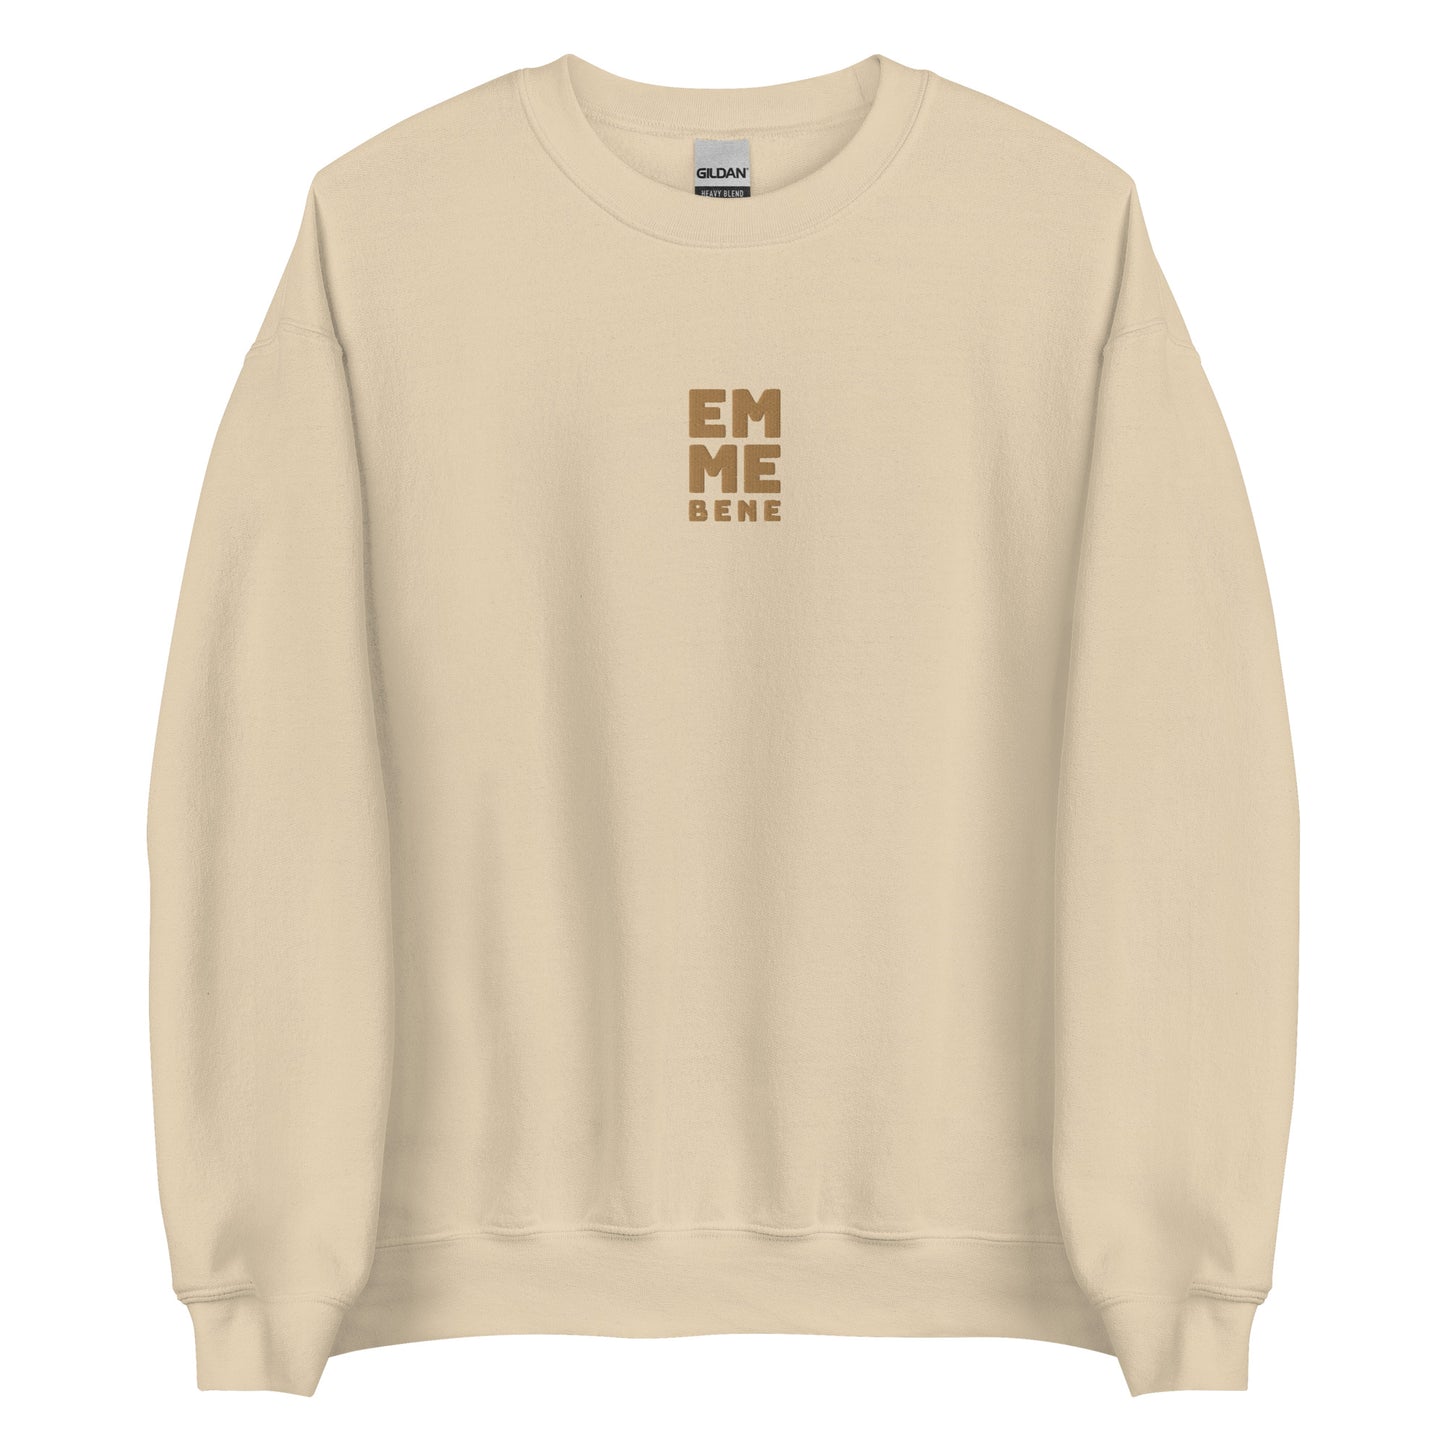 EMME BENE tan embroidered sweatshirt